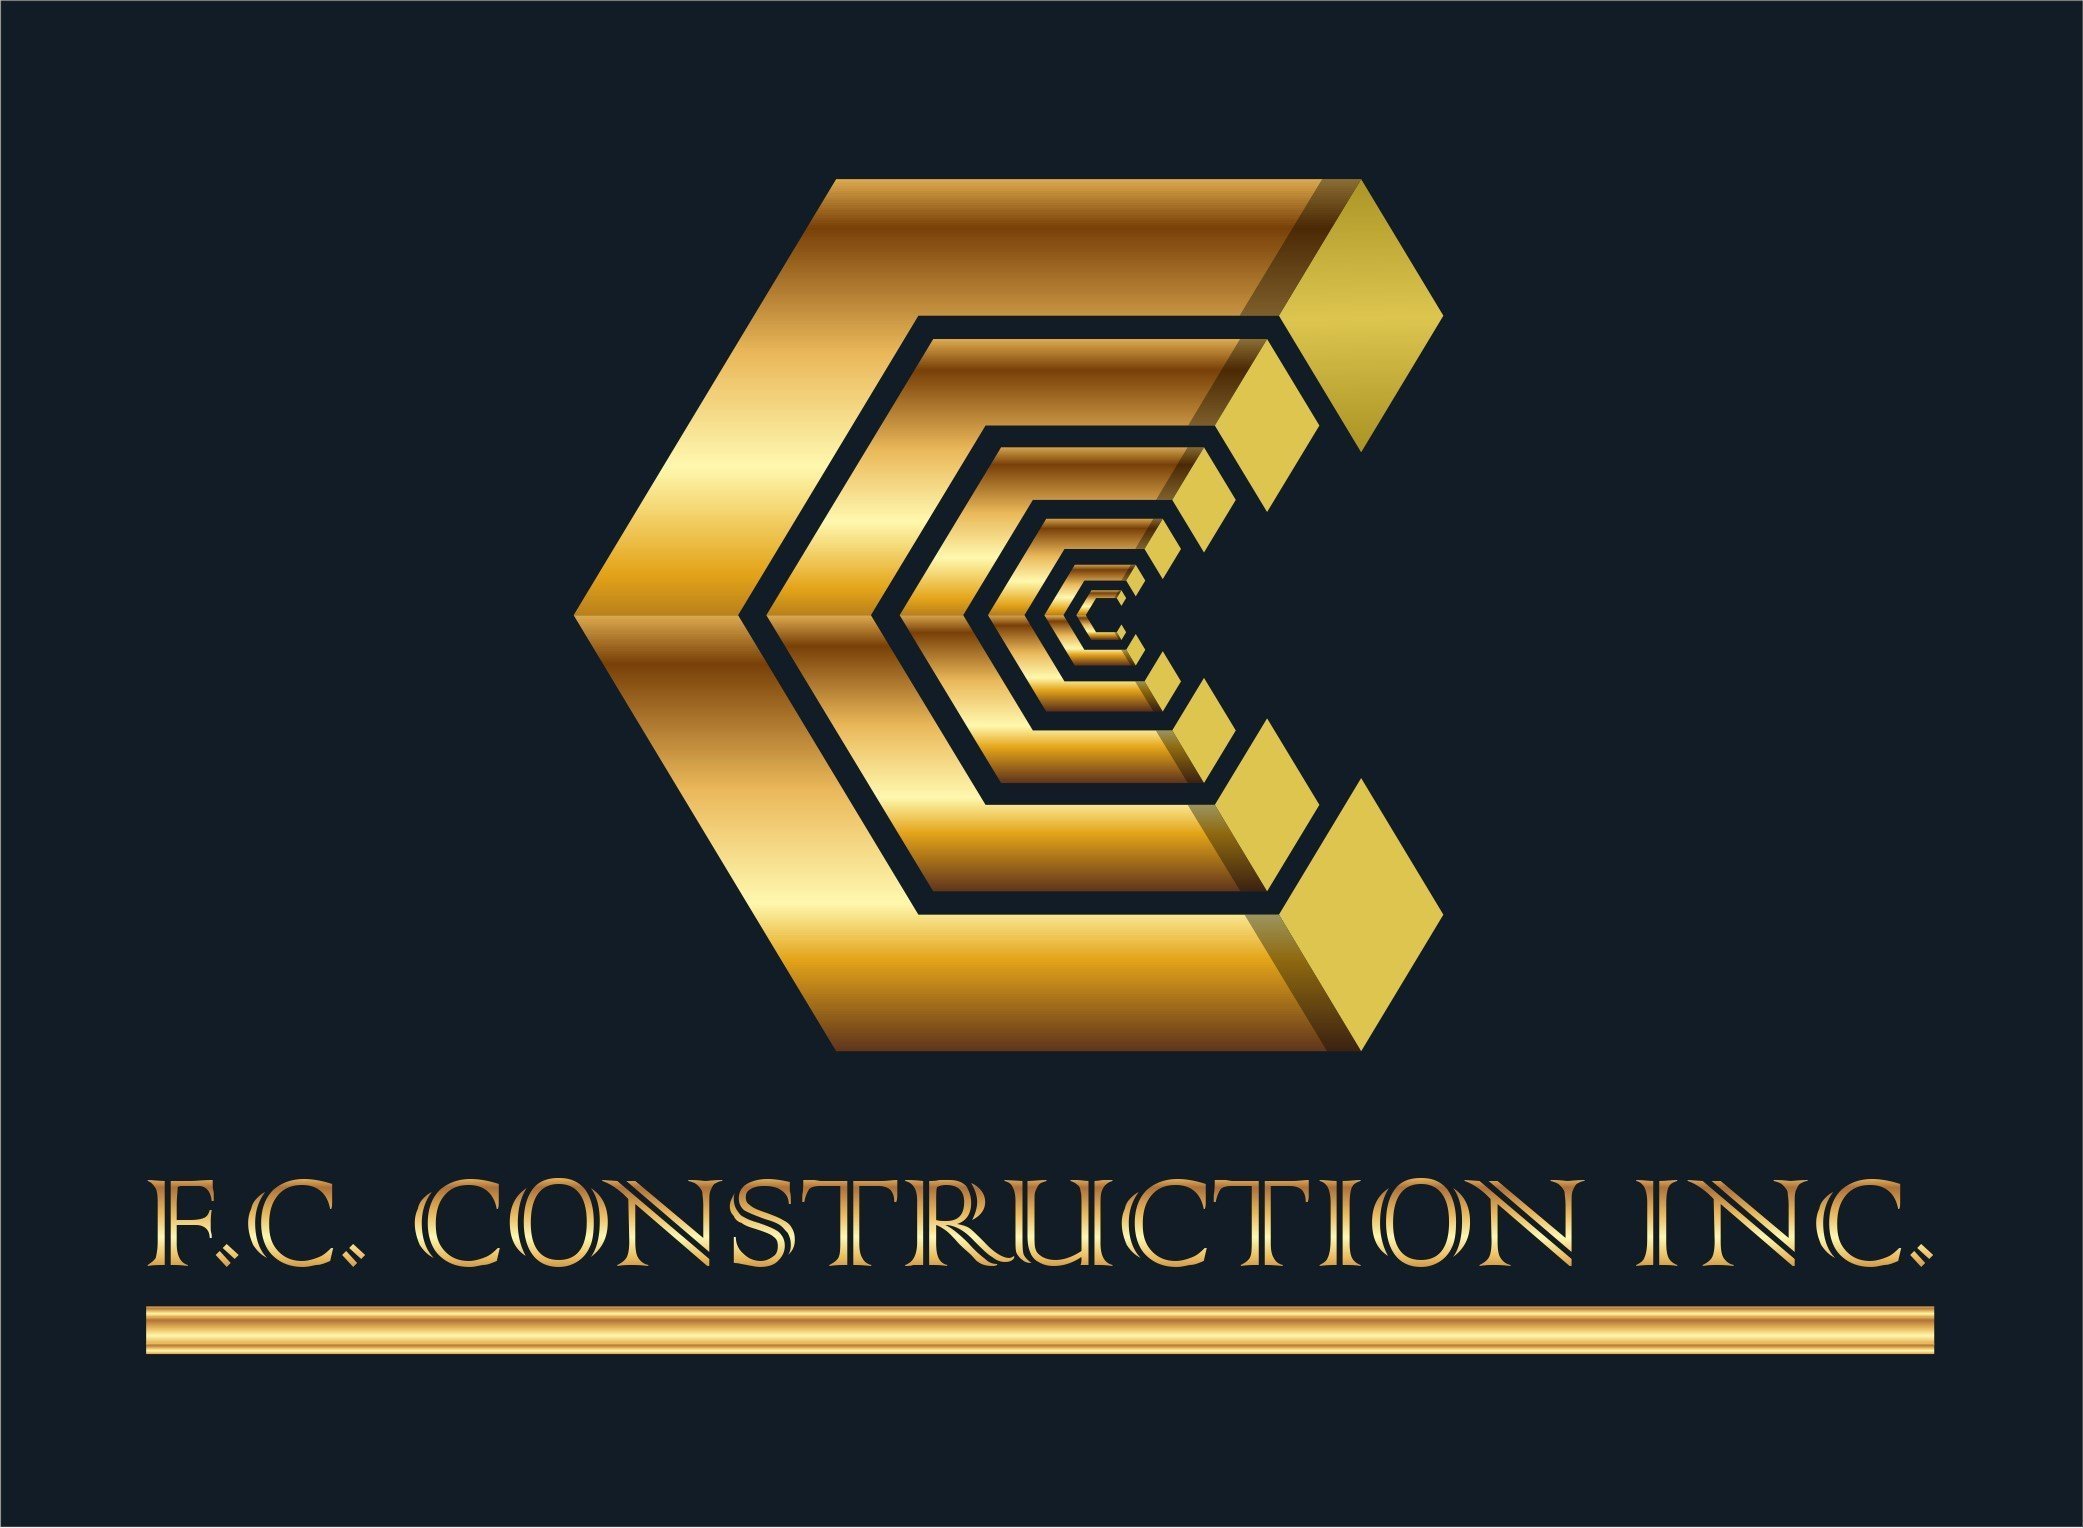  F.C. Construction, Inc. 